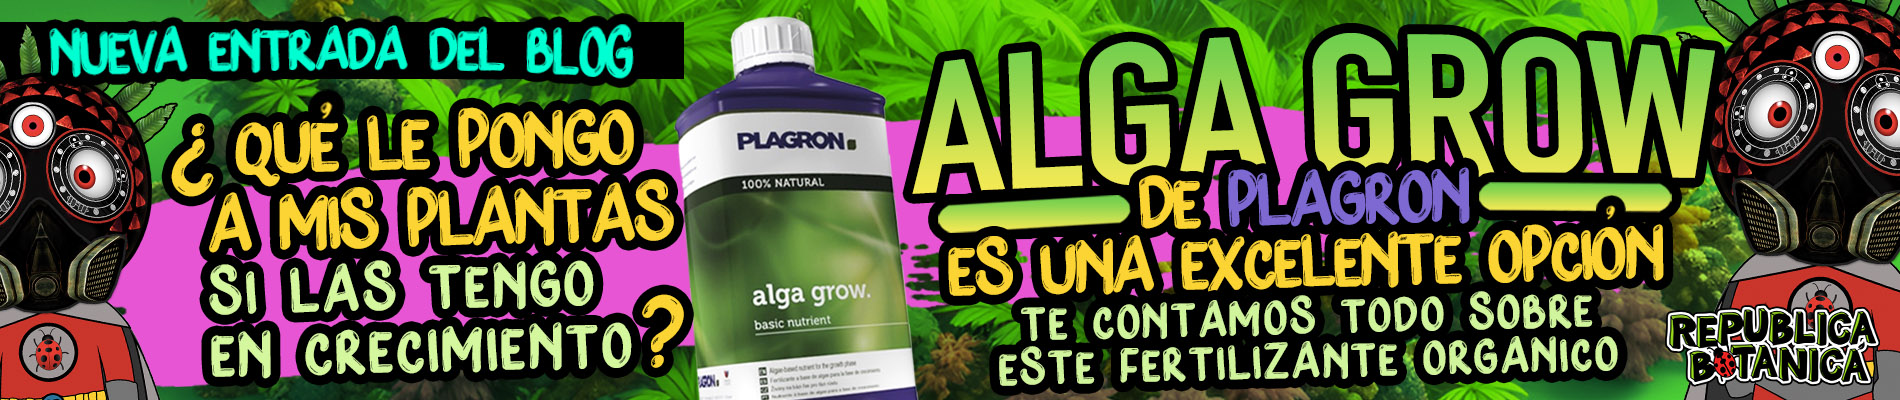 banner-web-BLOG-ALGA-GROW-MAYO-republica-botanica